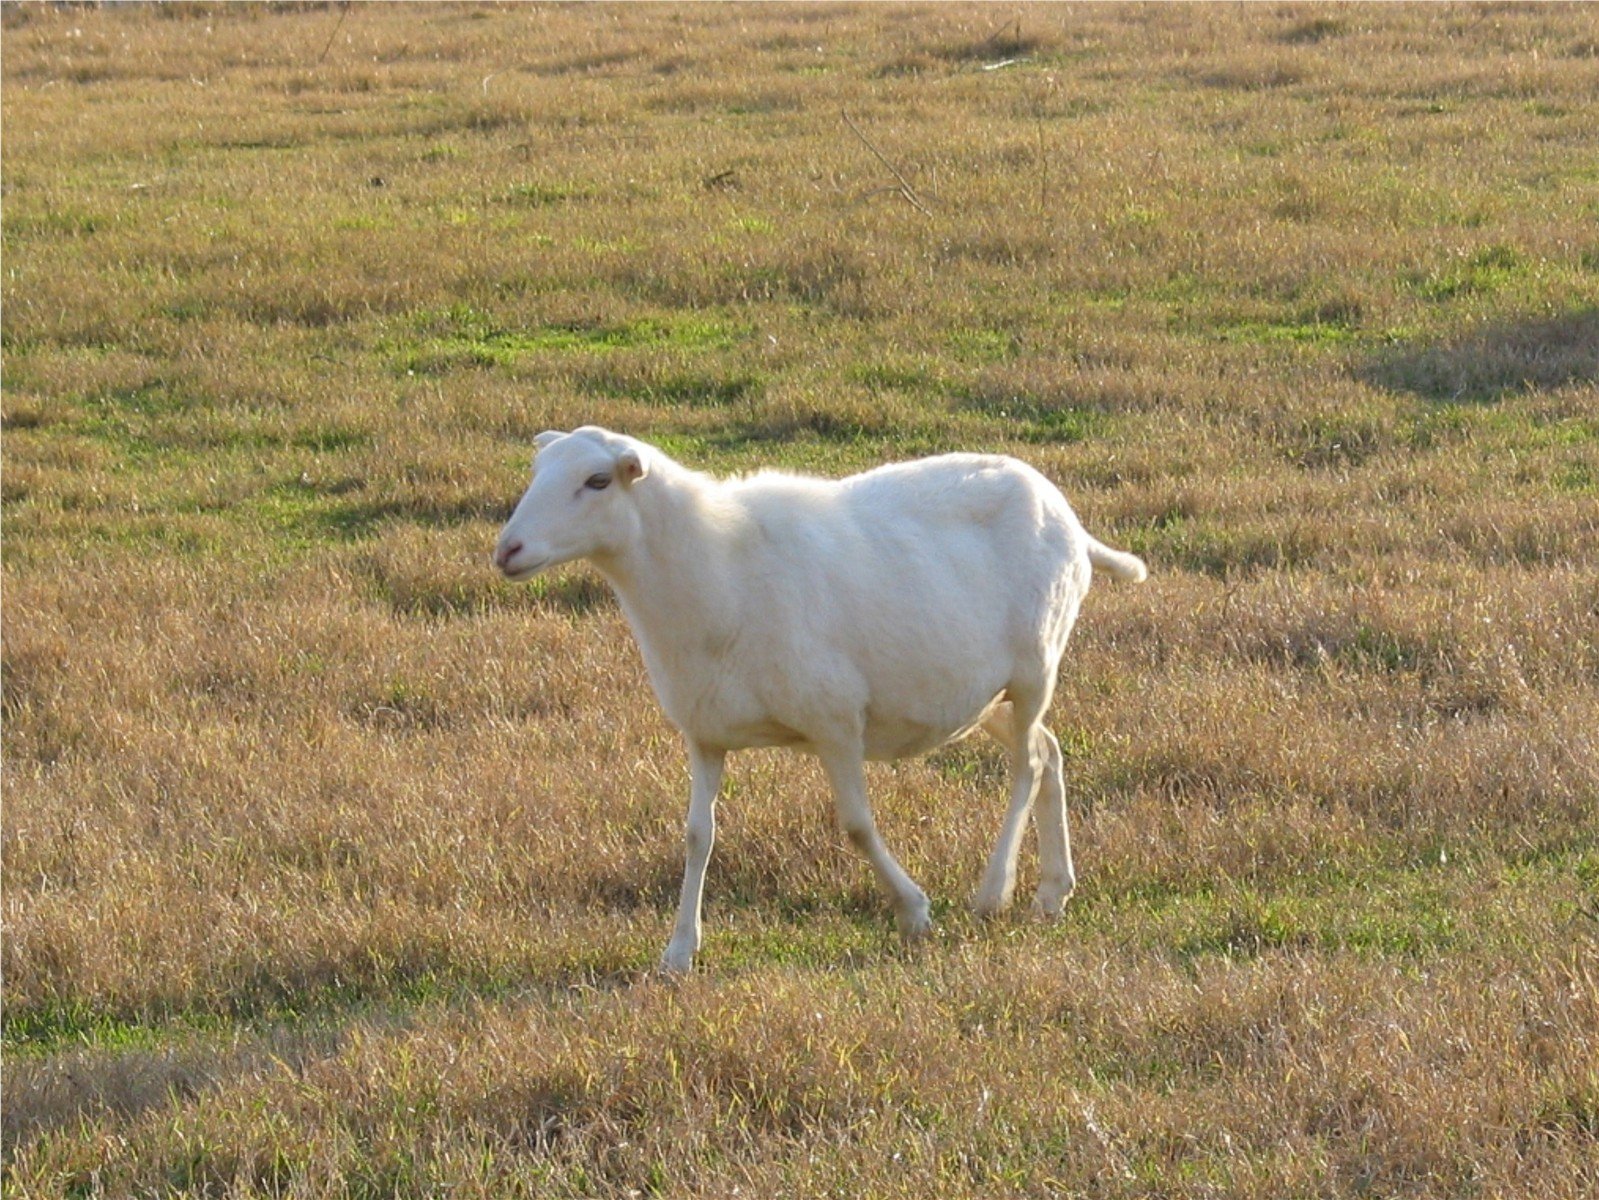 a white animal walks through a grassy field